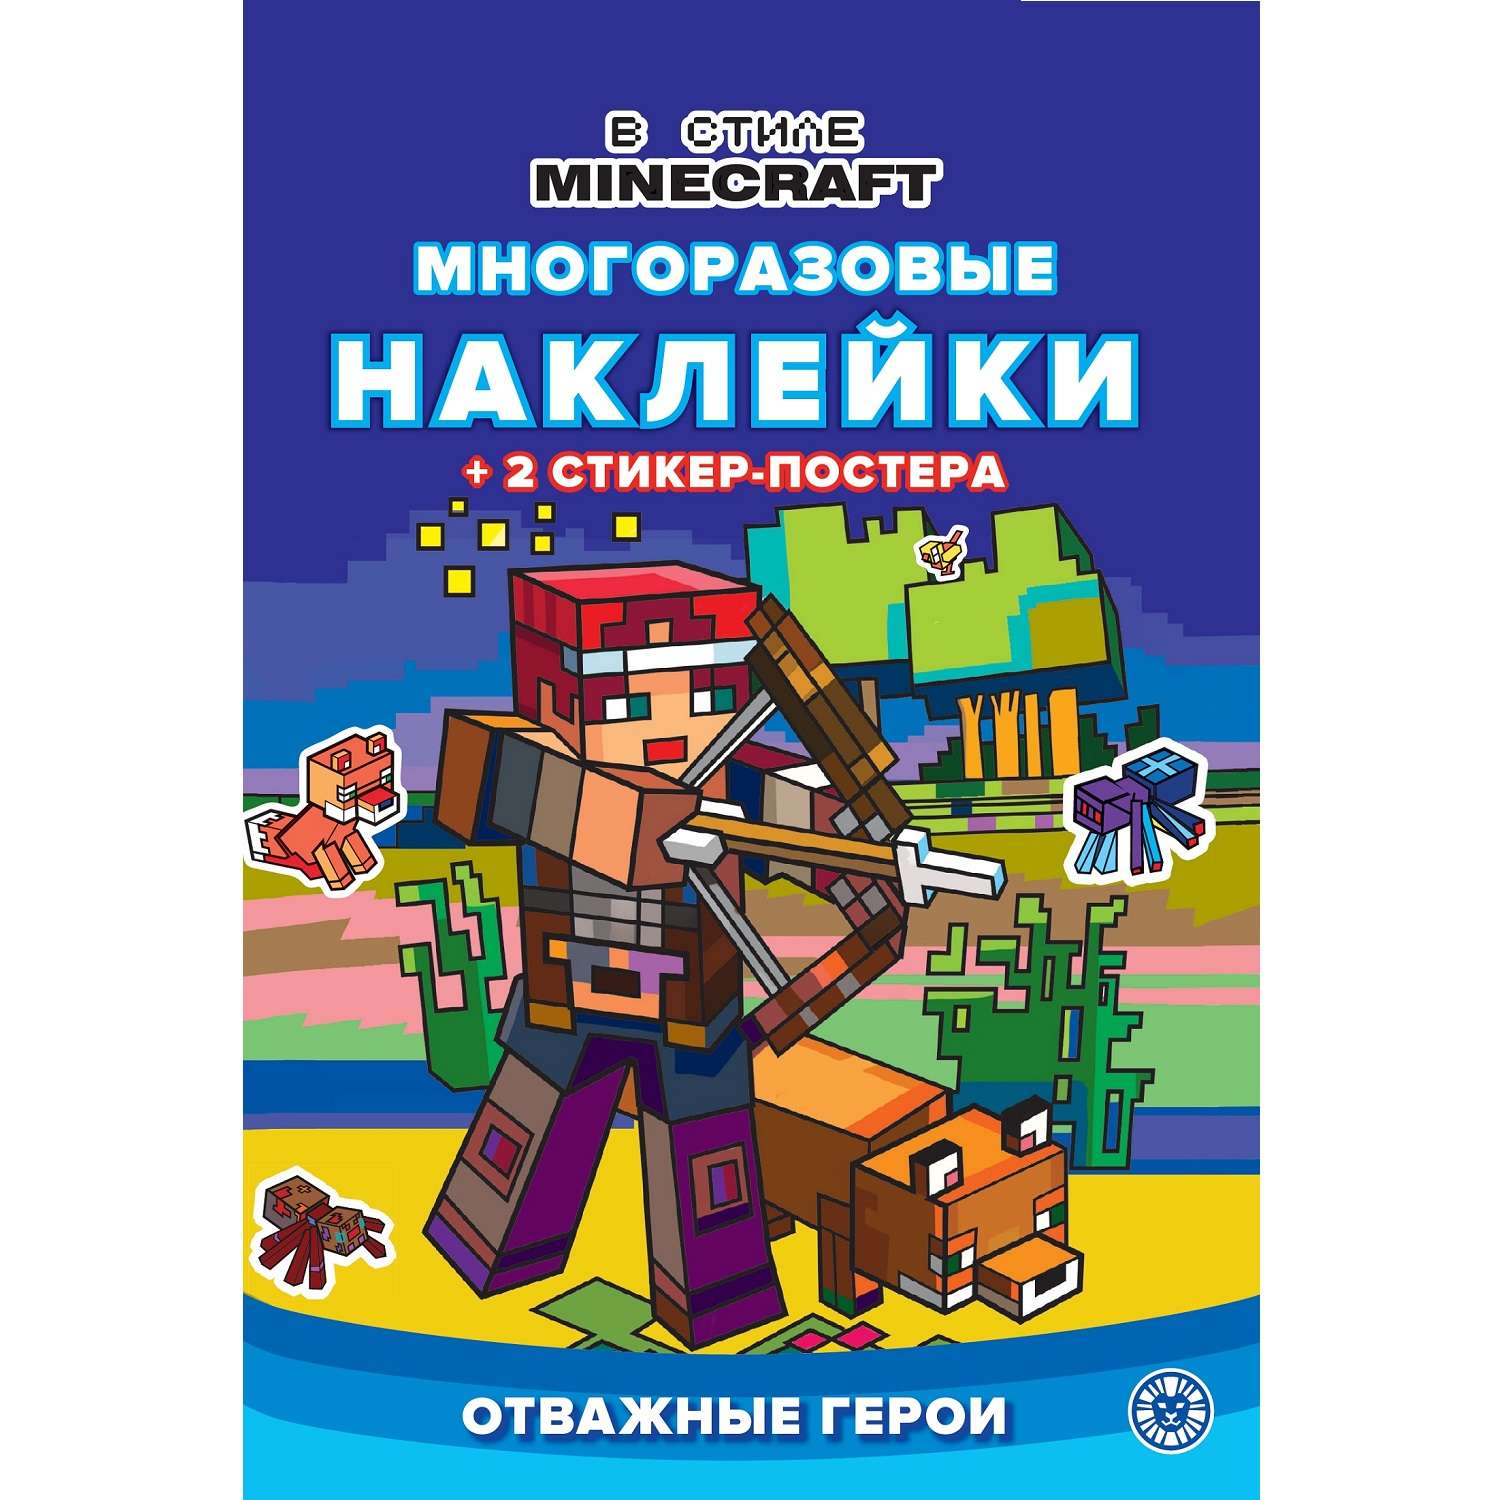 Книга развивающая с многоразовыми наклейками и стикер-постером Mini В стиле Minecraft N МНСП 2209 - фото 1